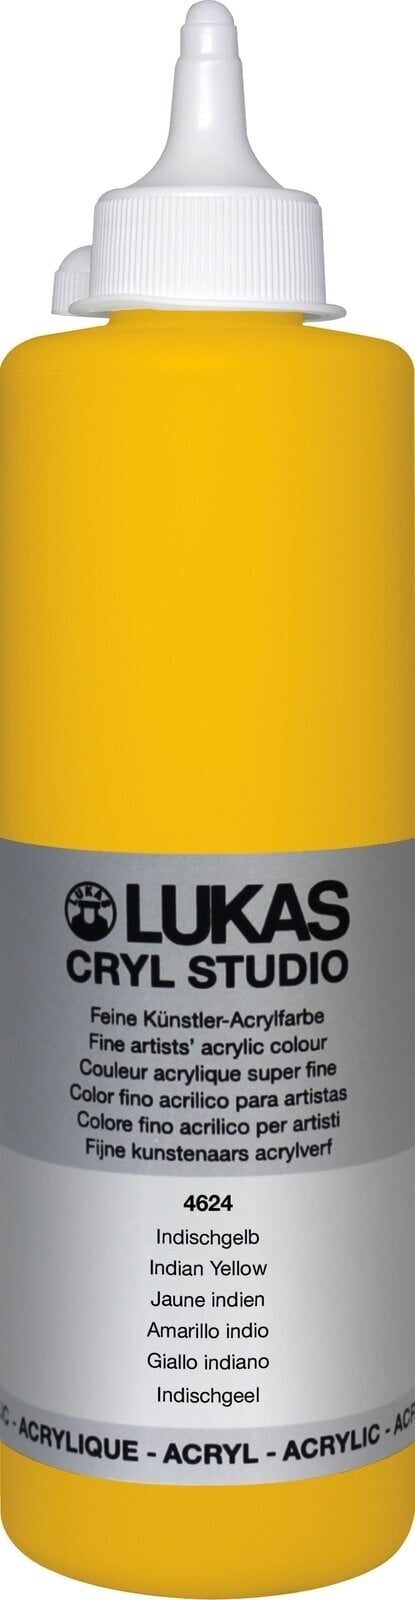 Peinture acrylique Lukas Cryl Studio Acrylic Paint Plastic Bottle Peinture acrylique Indian Yellow 500 ml 1 pc